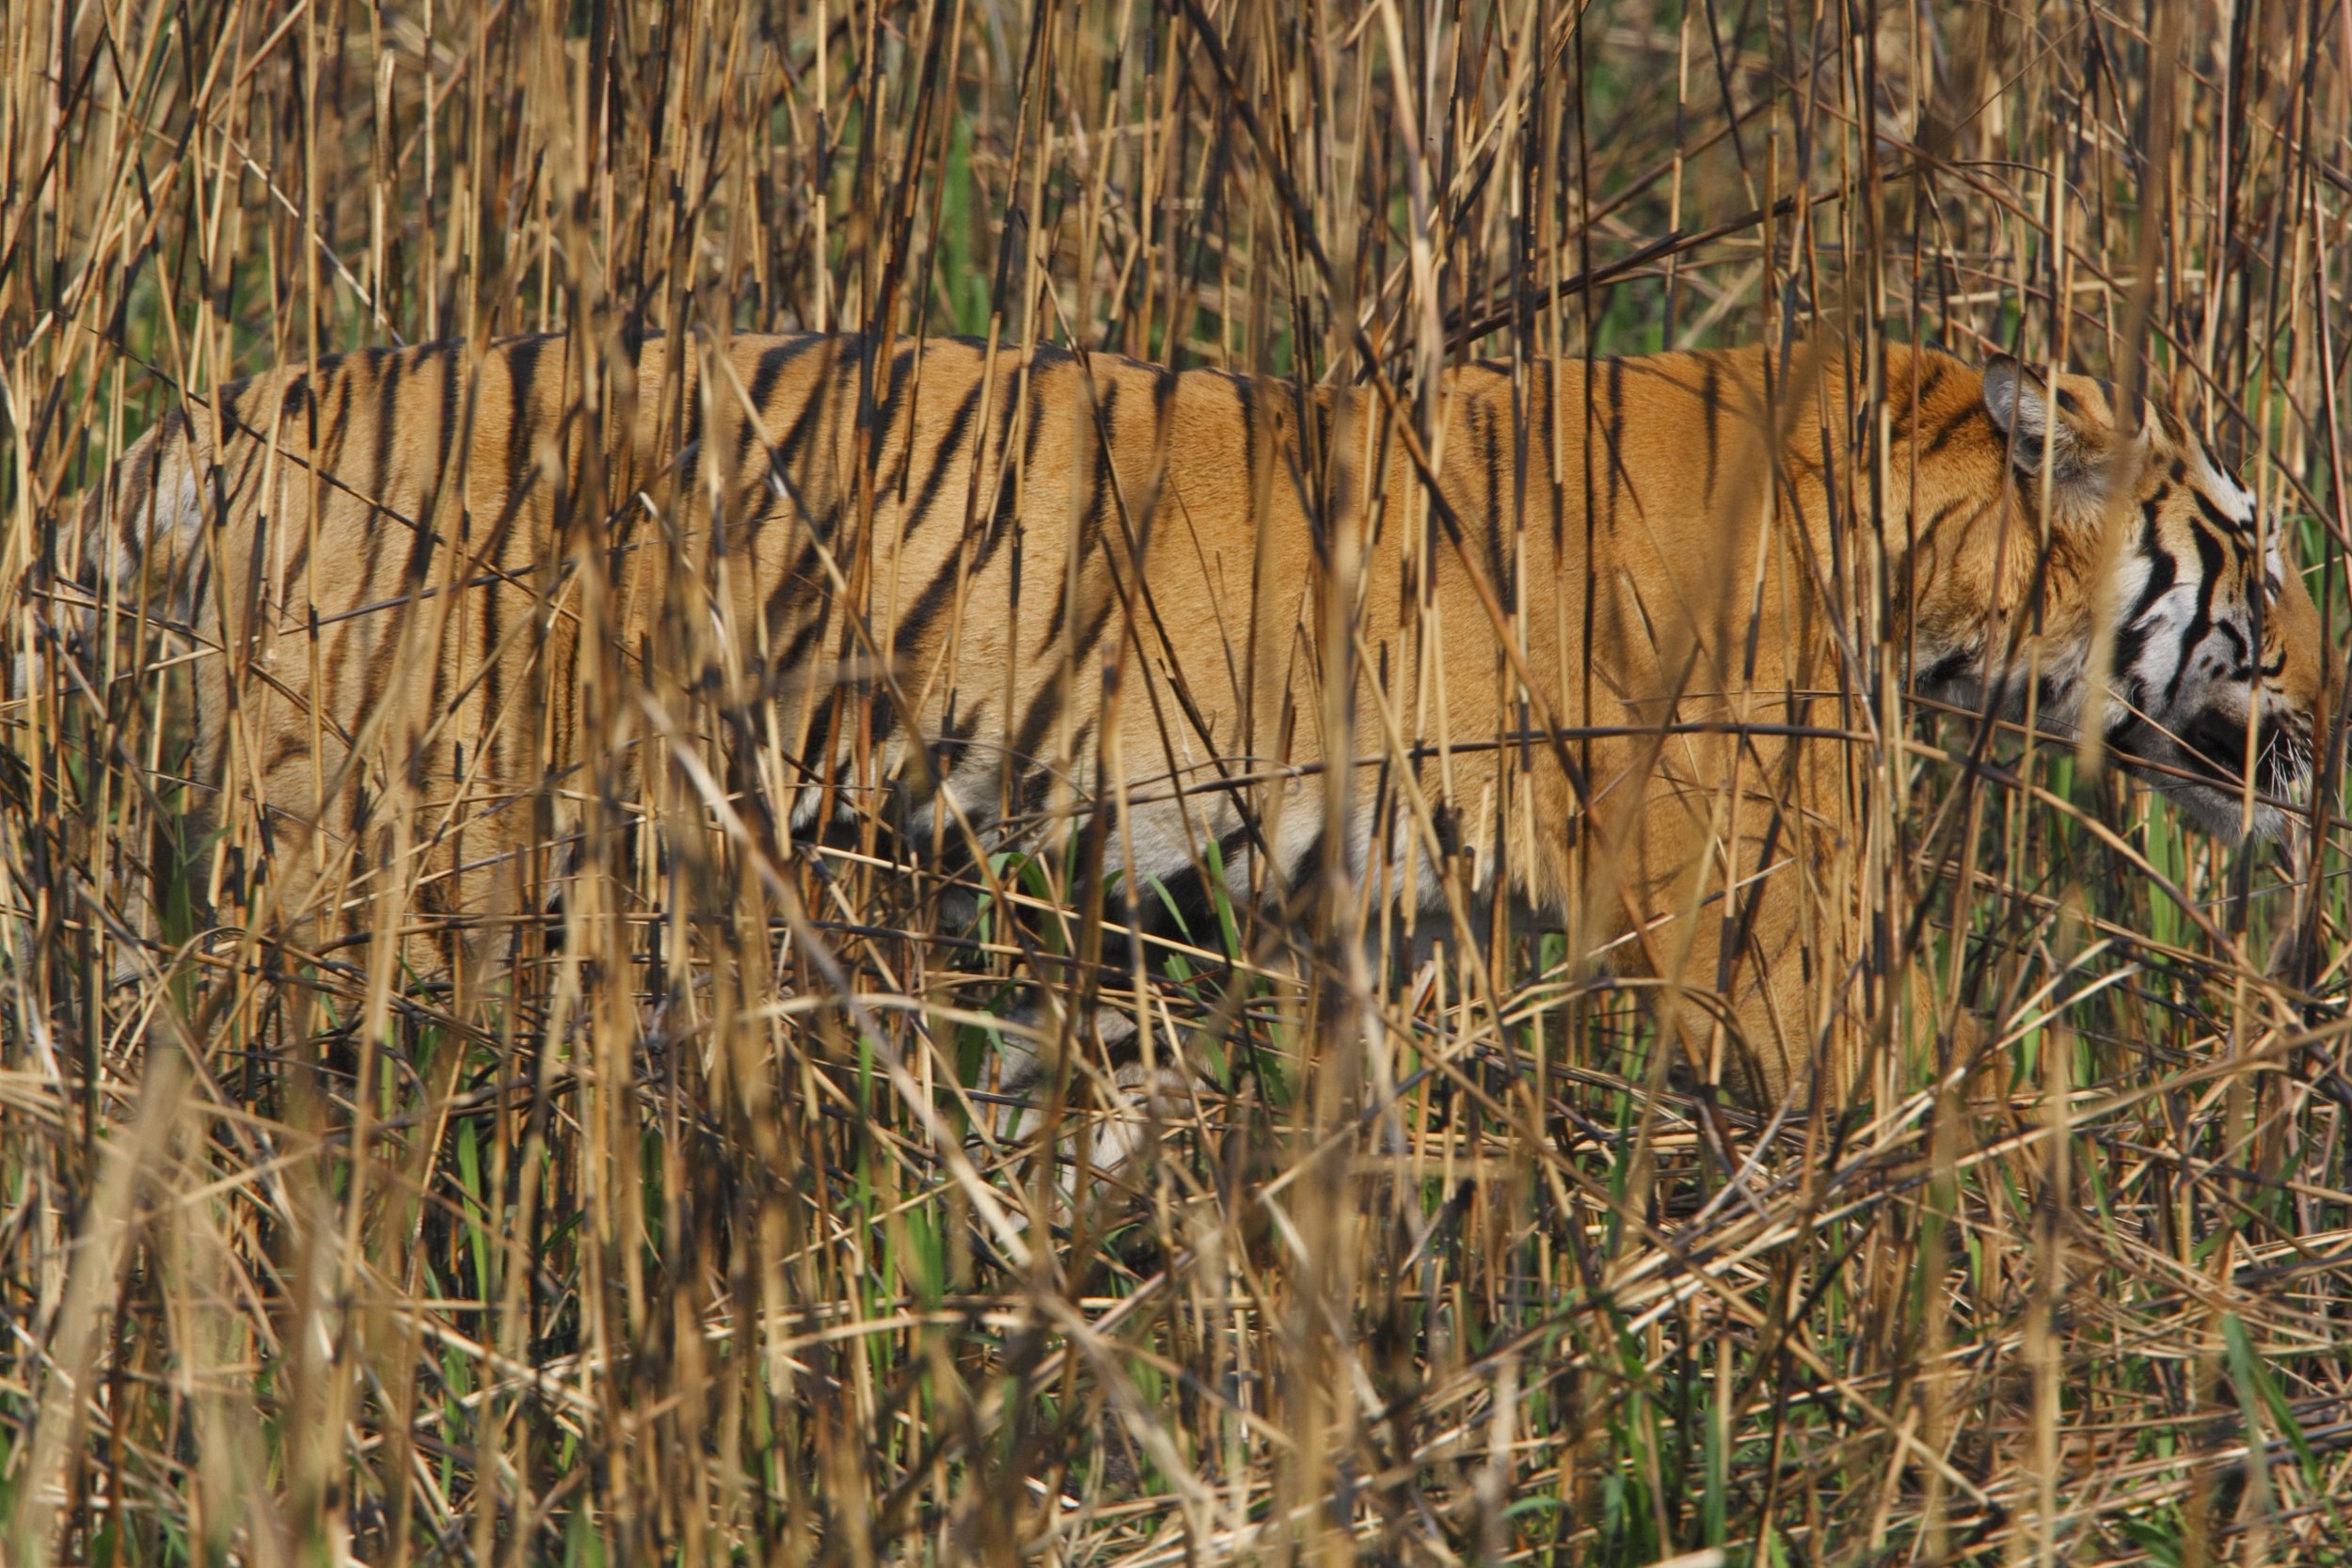 Tiger-concealed-in-grass-Kaziranga-National-Park-India_CR-Steve-Winter-scaled.jpeg